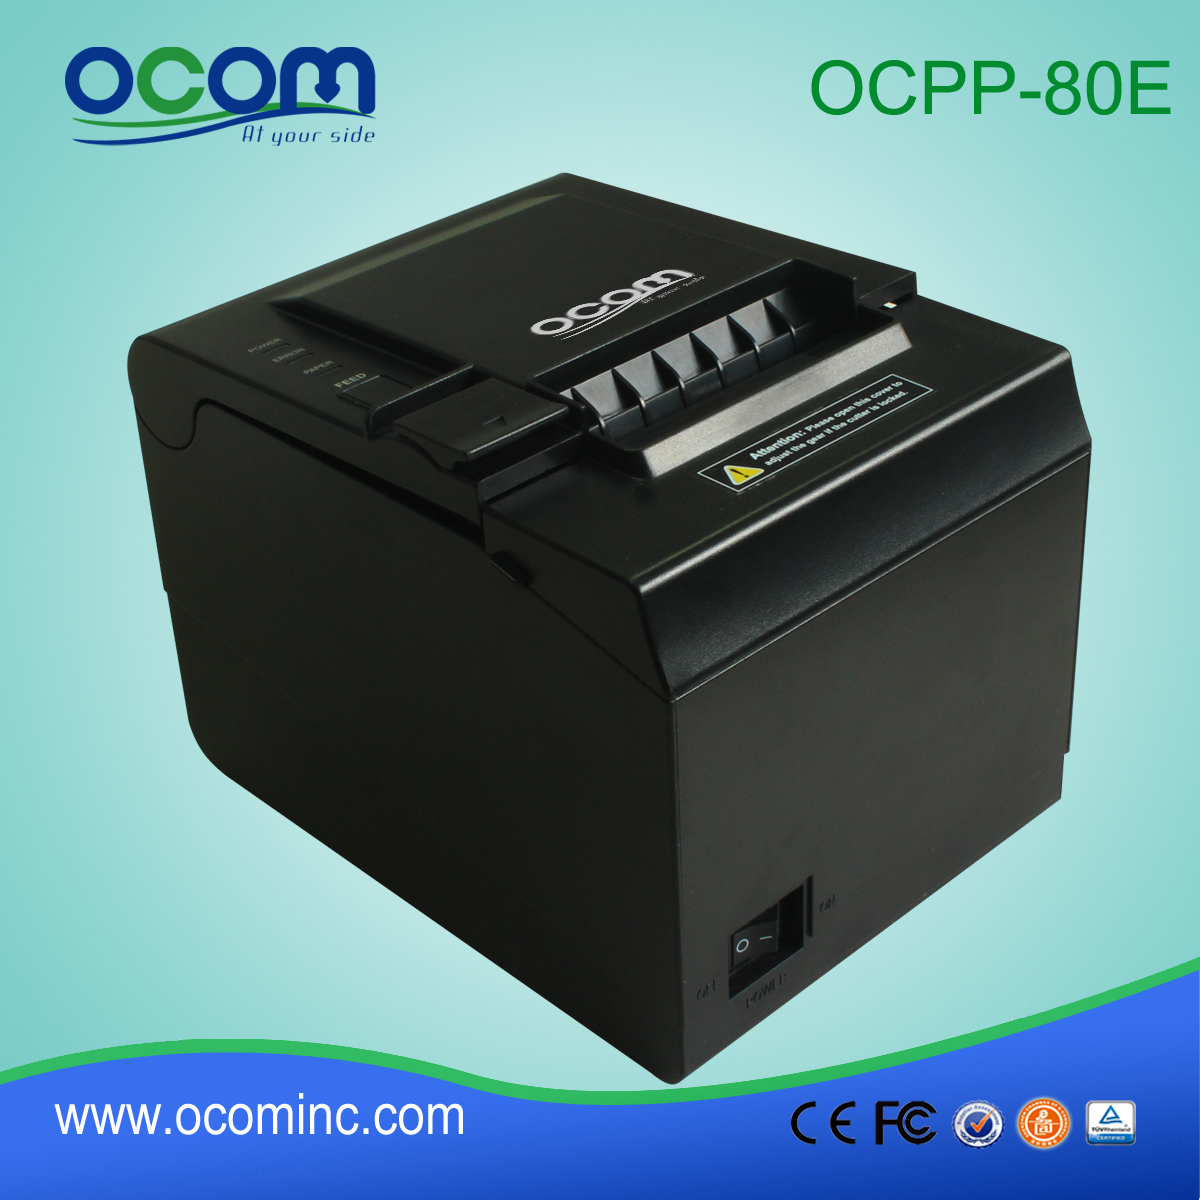 OCPP-80E --- China lage thermische ontvangst prijs printer